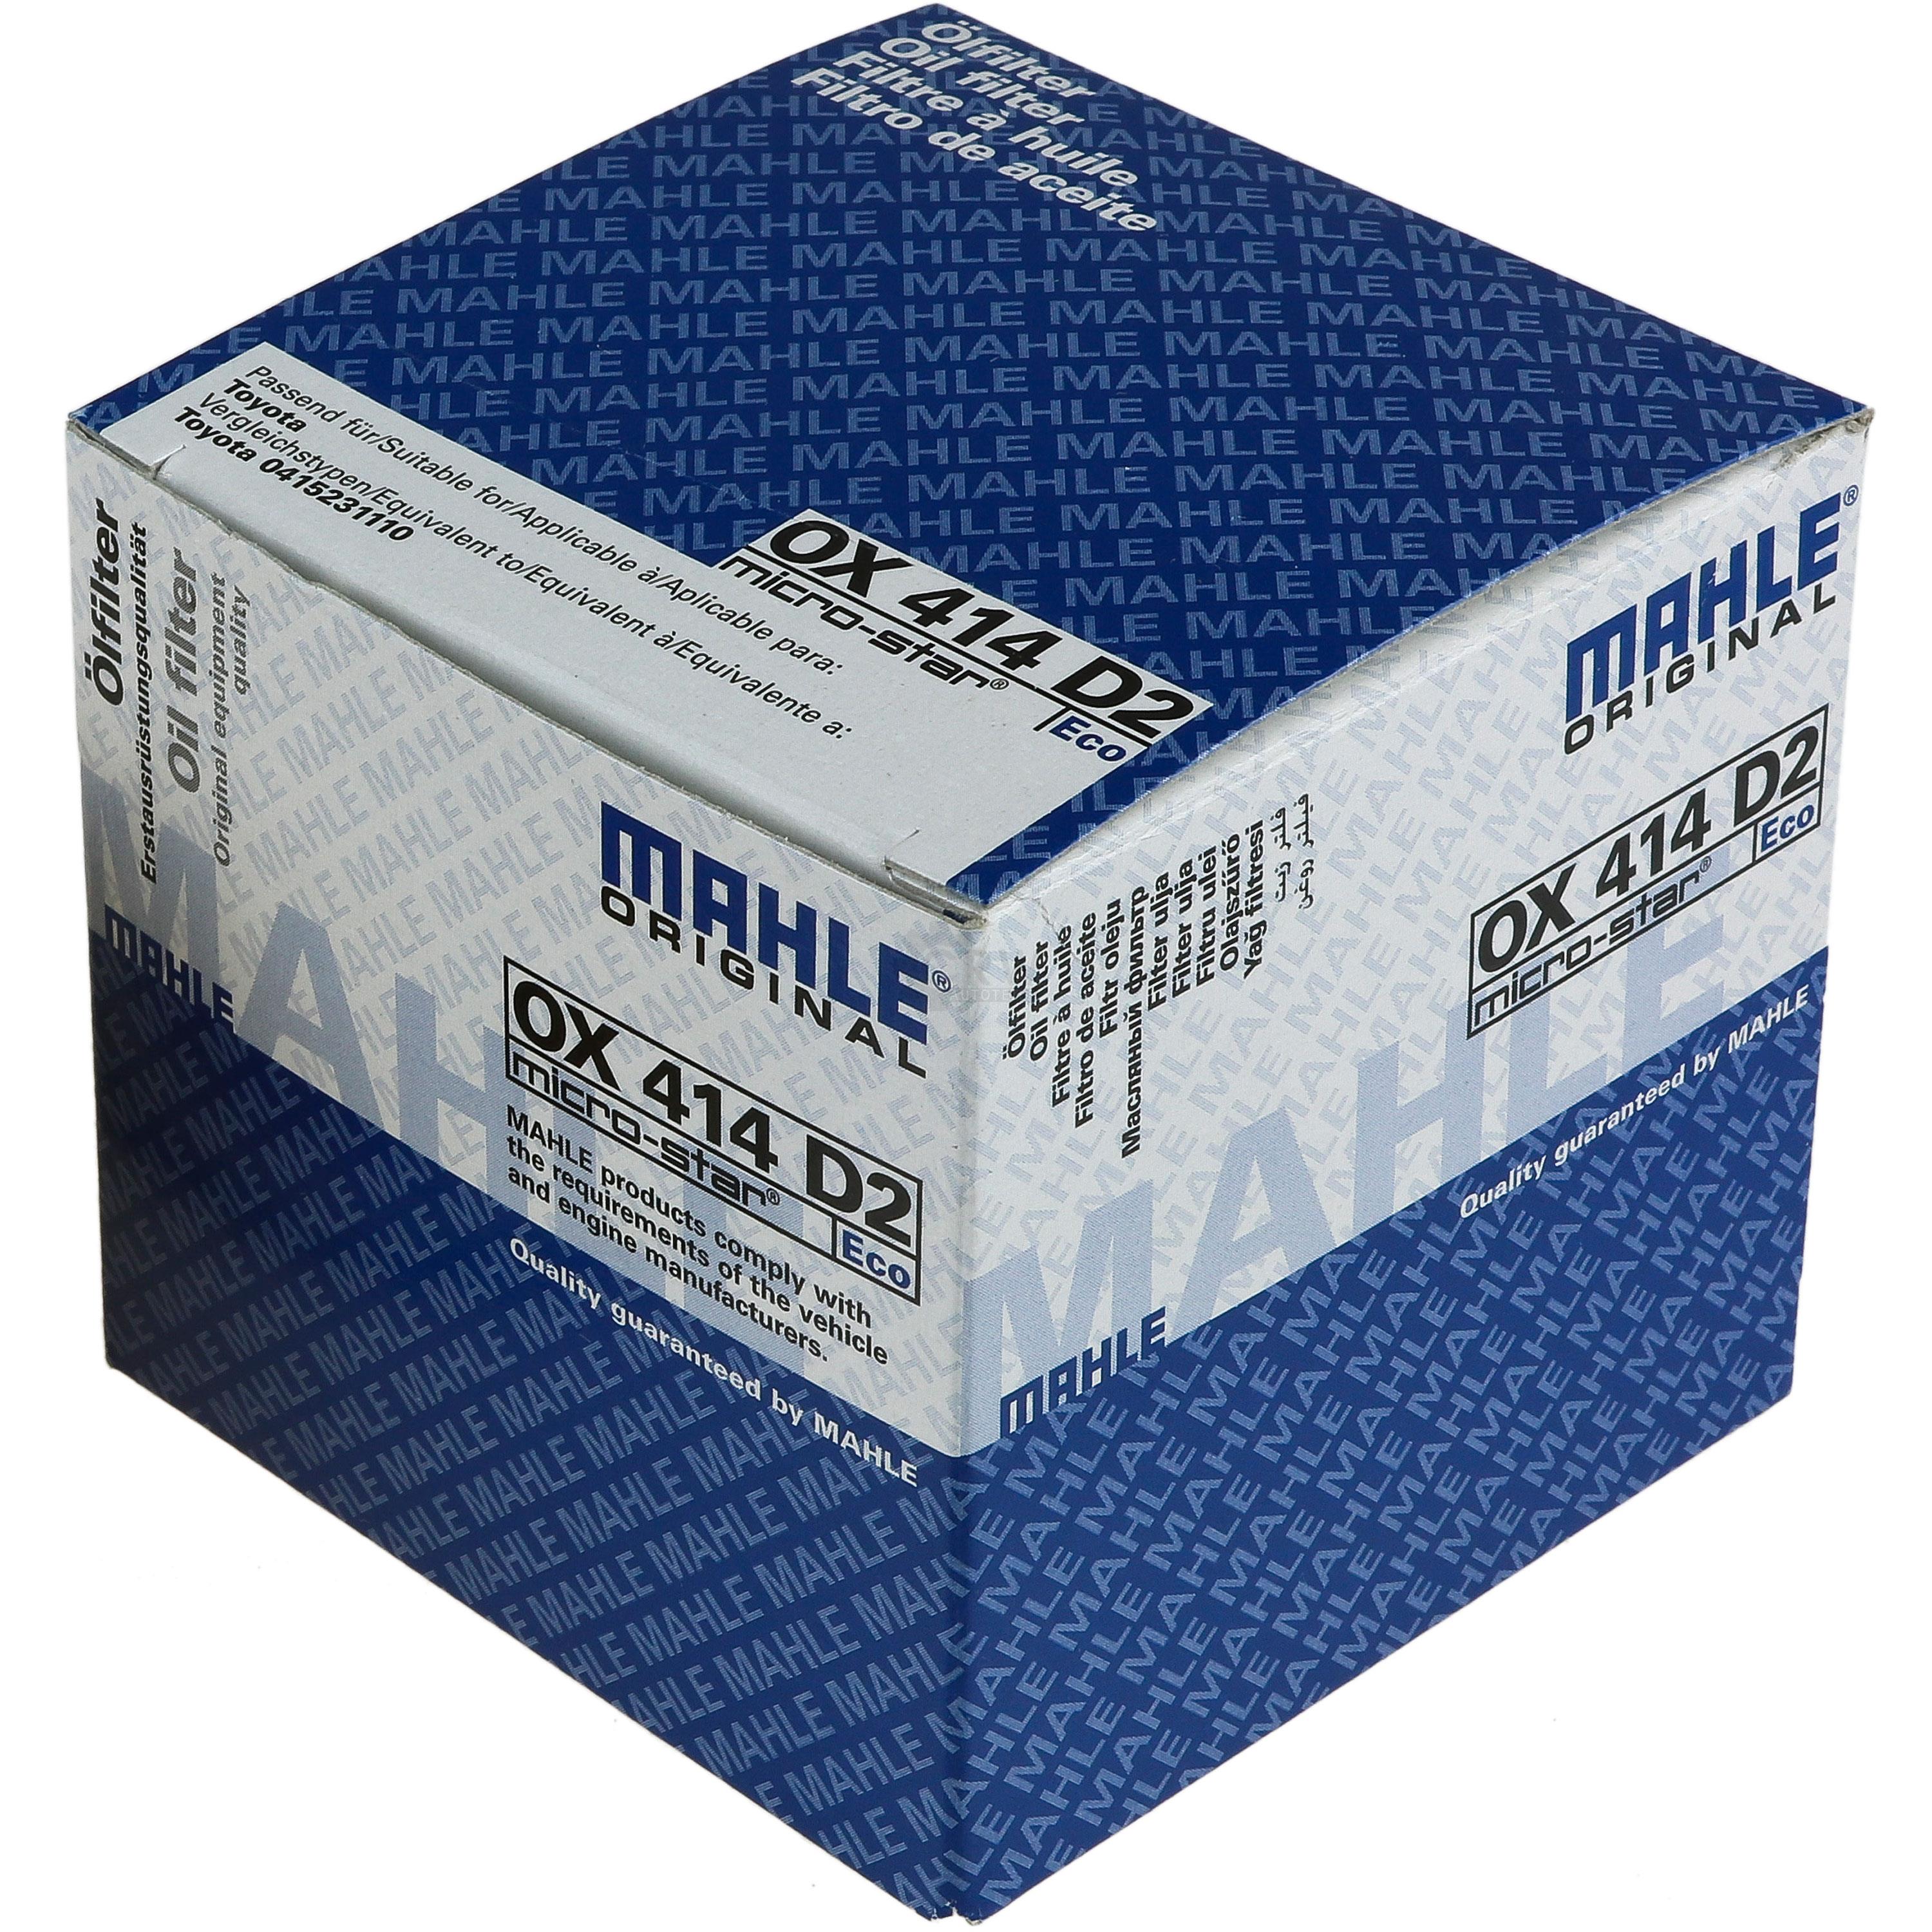 MAHLE / KNECHT Ölfilter OX 414D2 Oil Filter